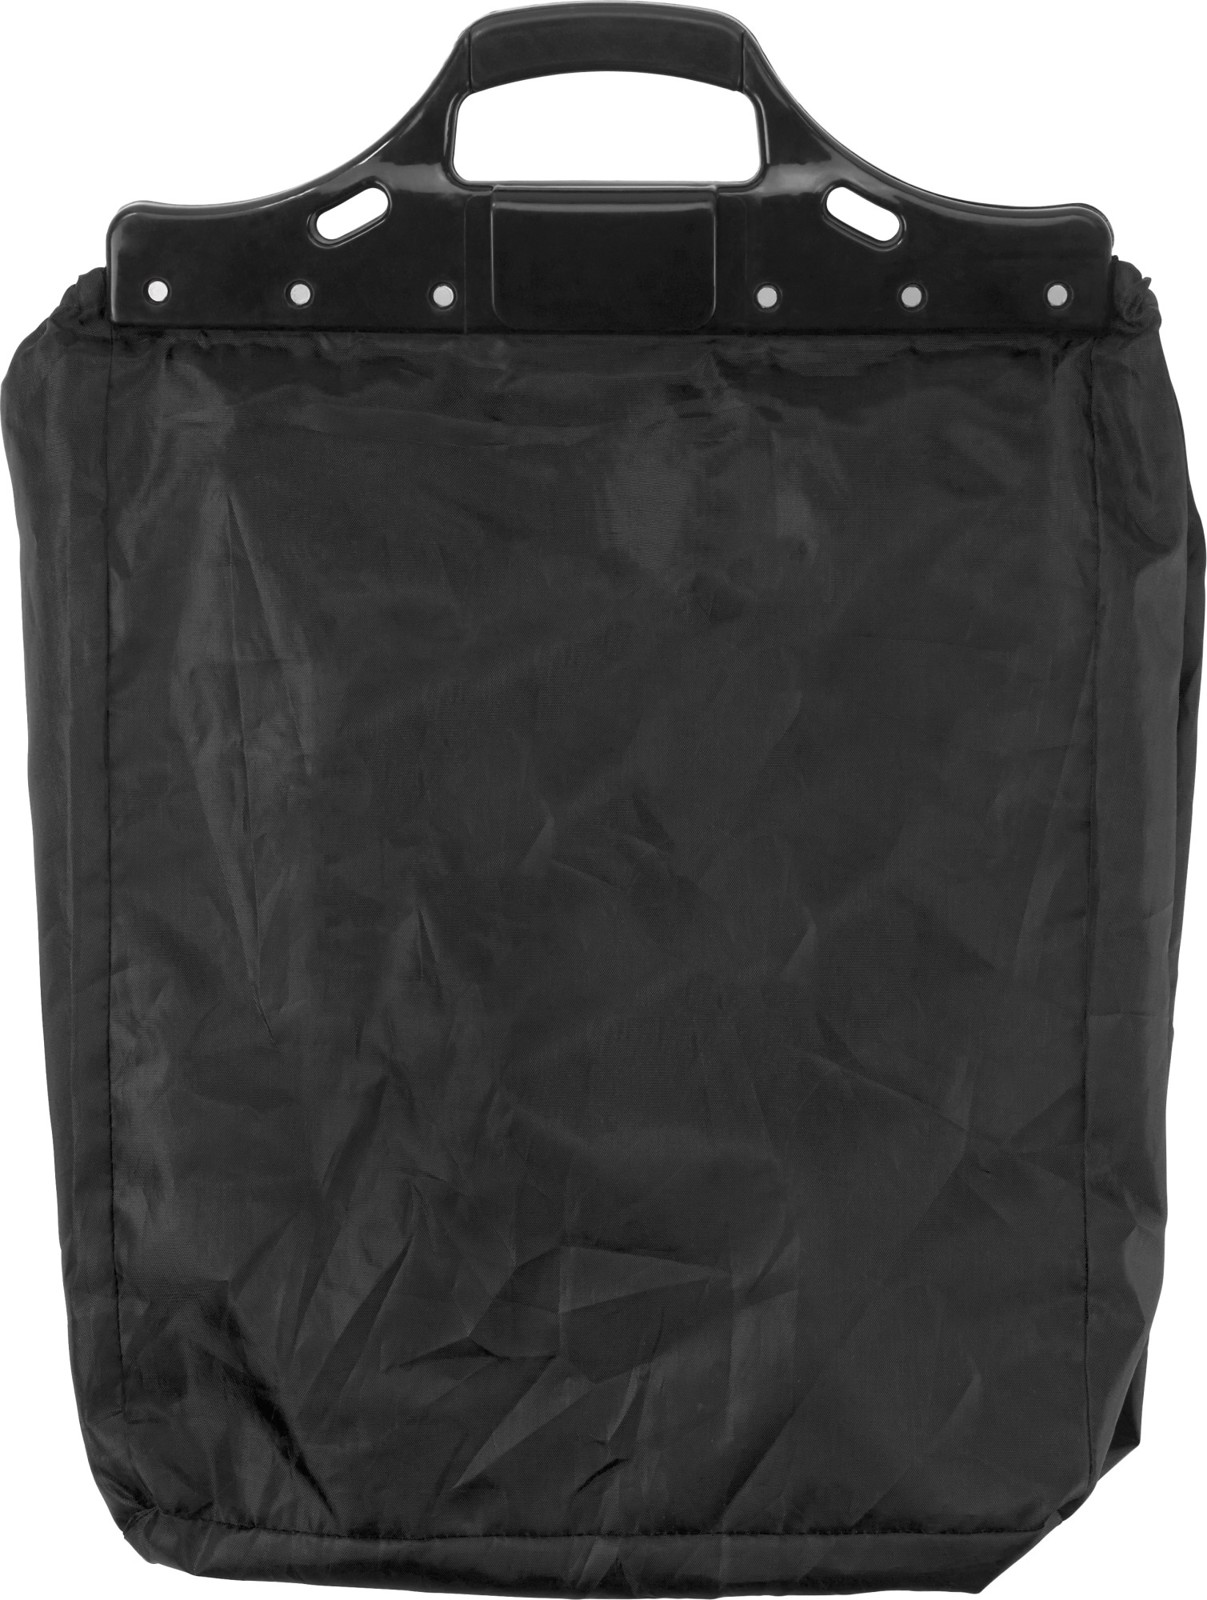 Polyester (210D) trolley shopping bag - Black